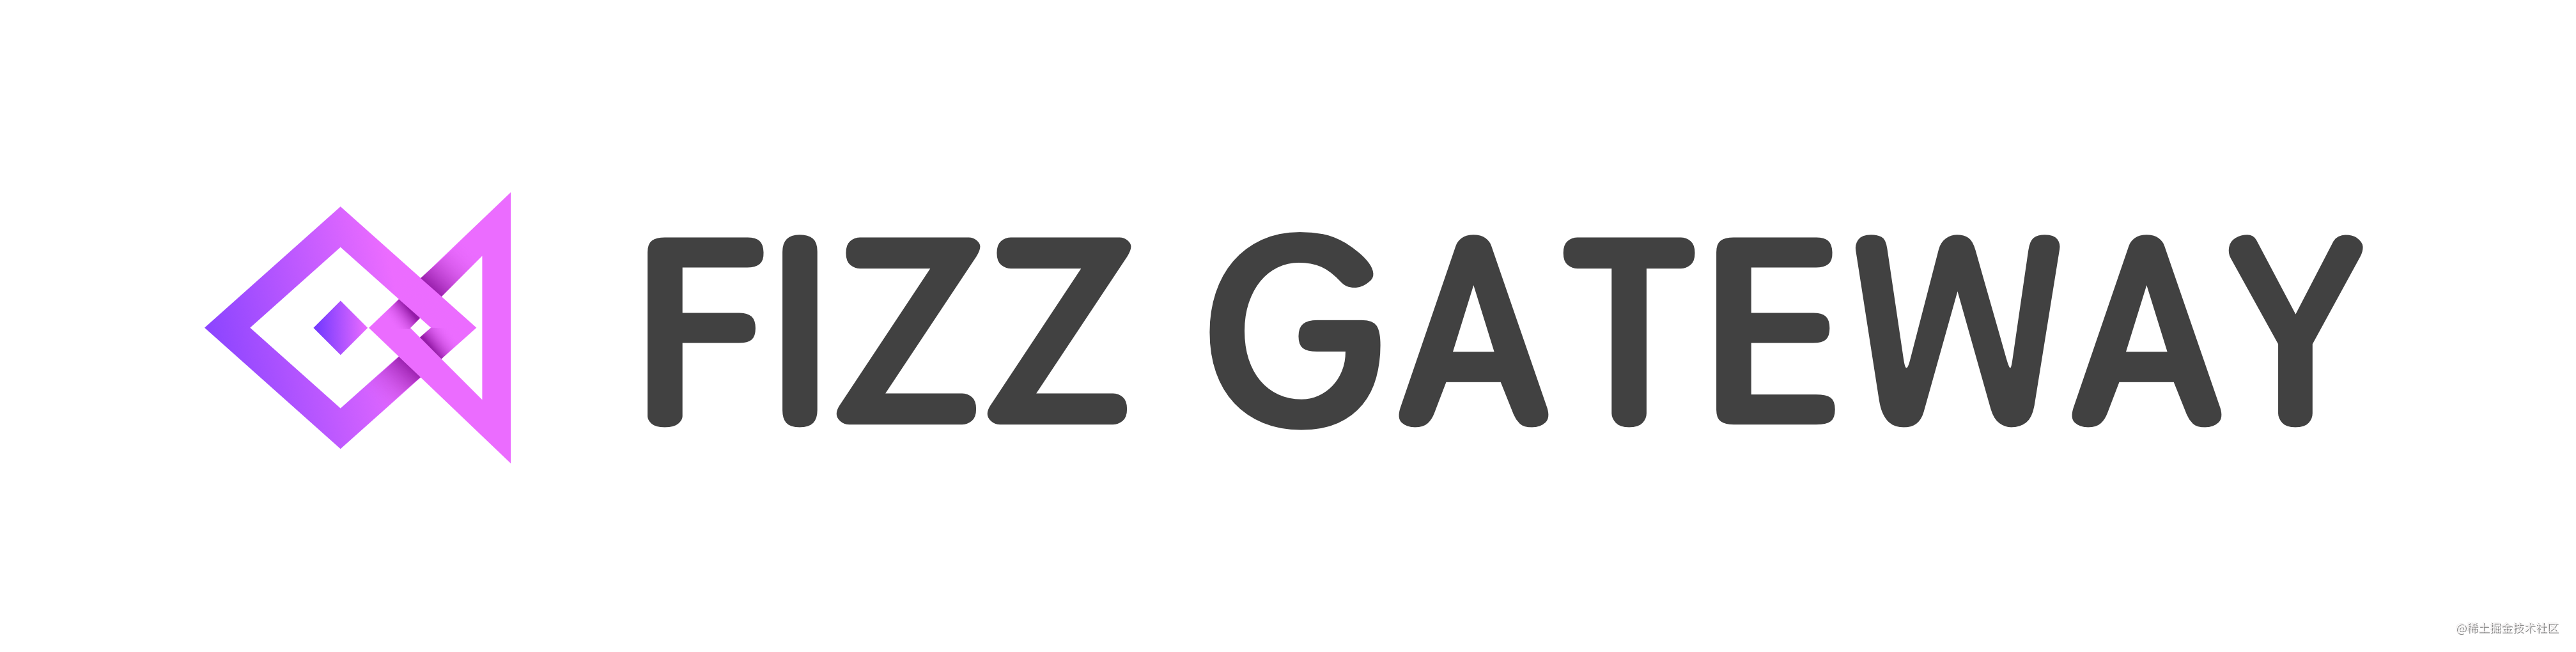 Fizz Gateway